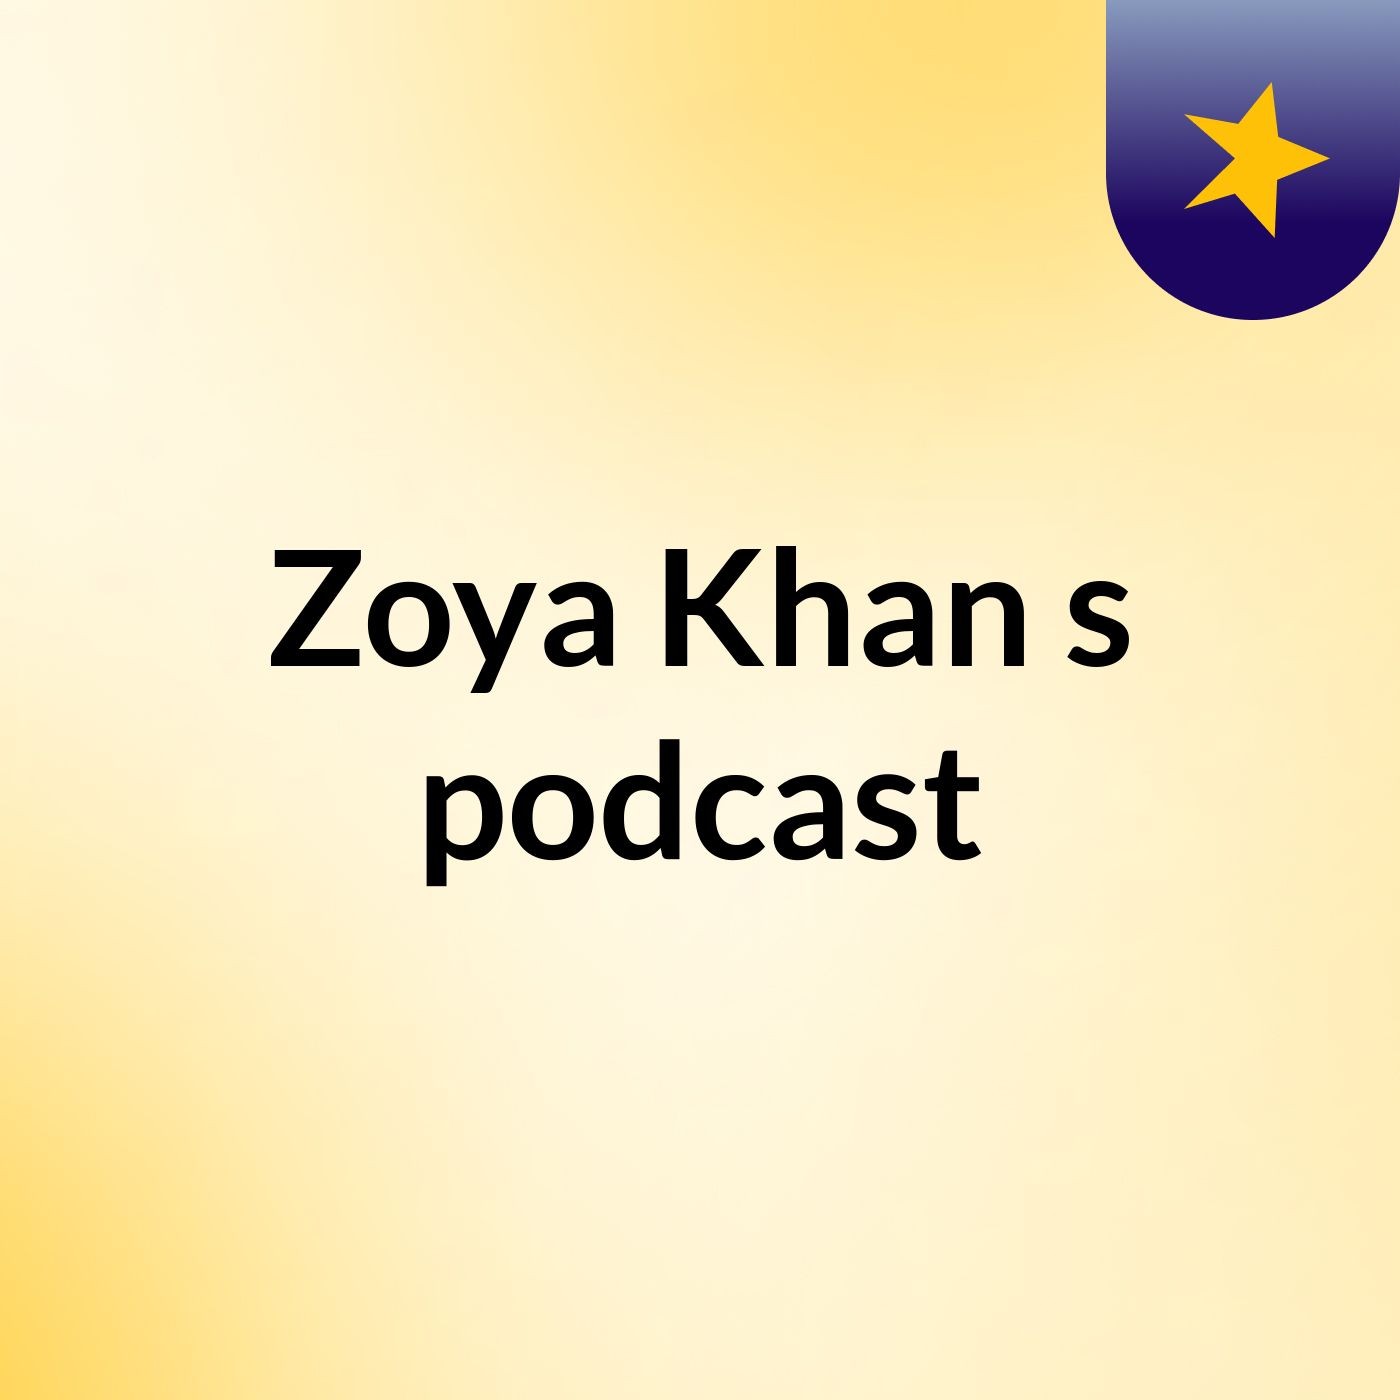 Zoya Khan's podcast